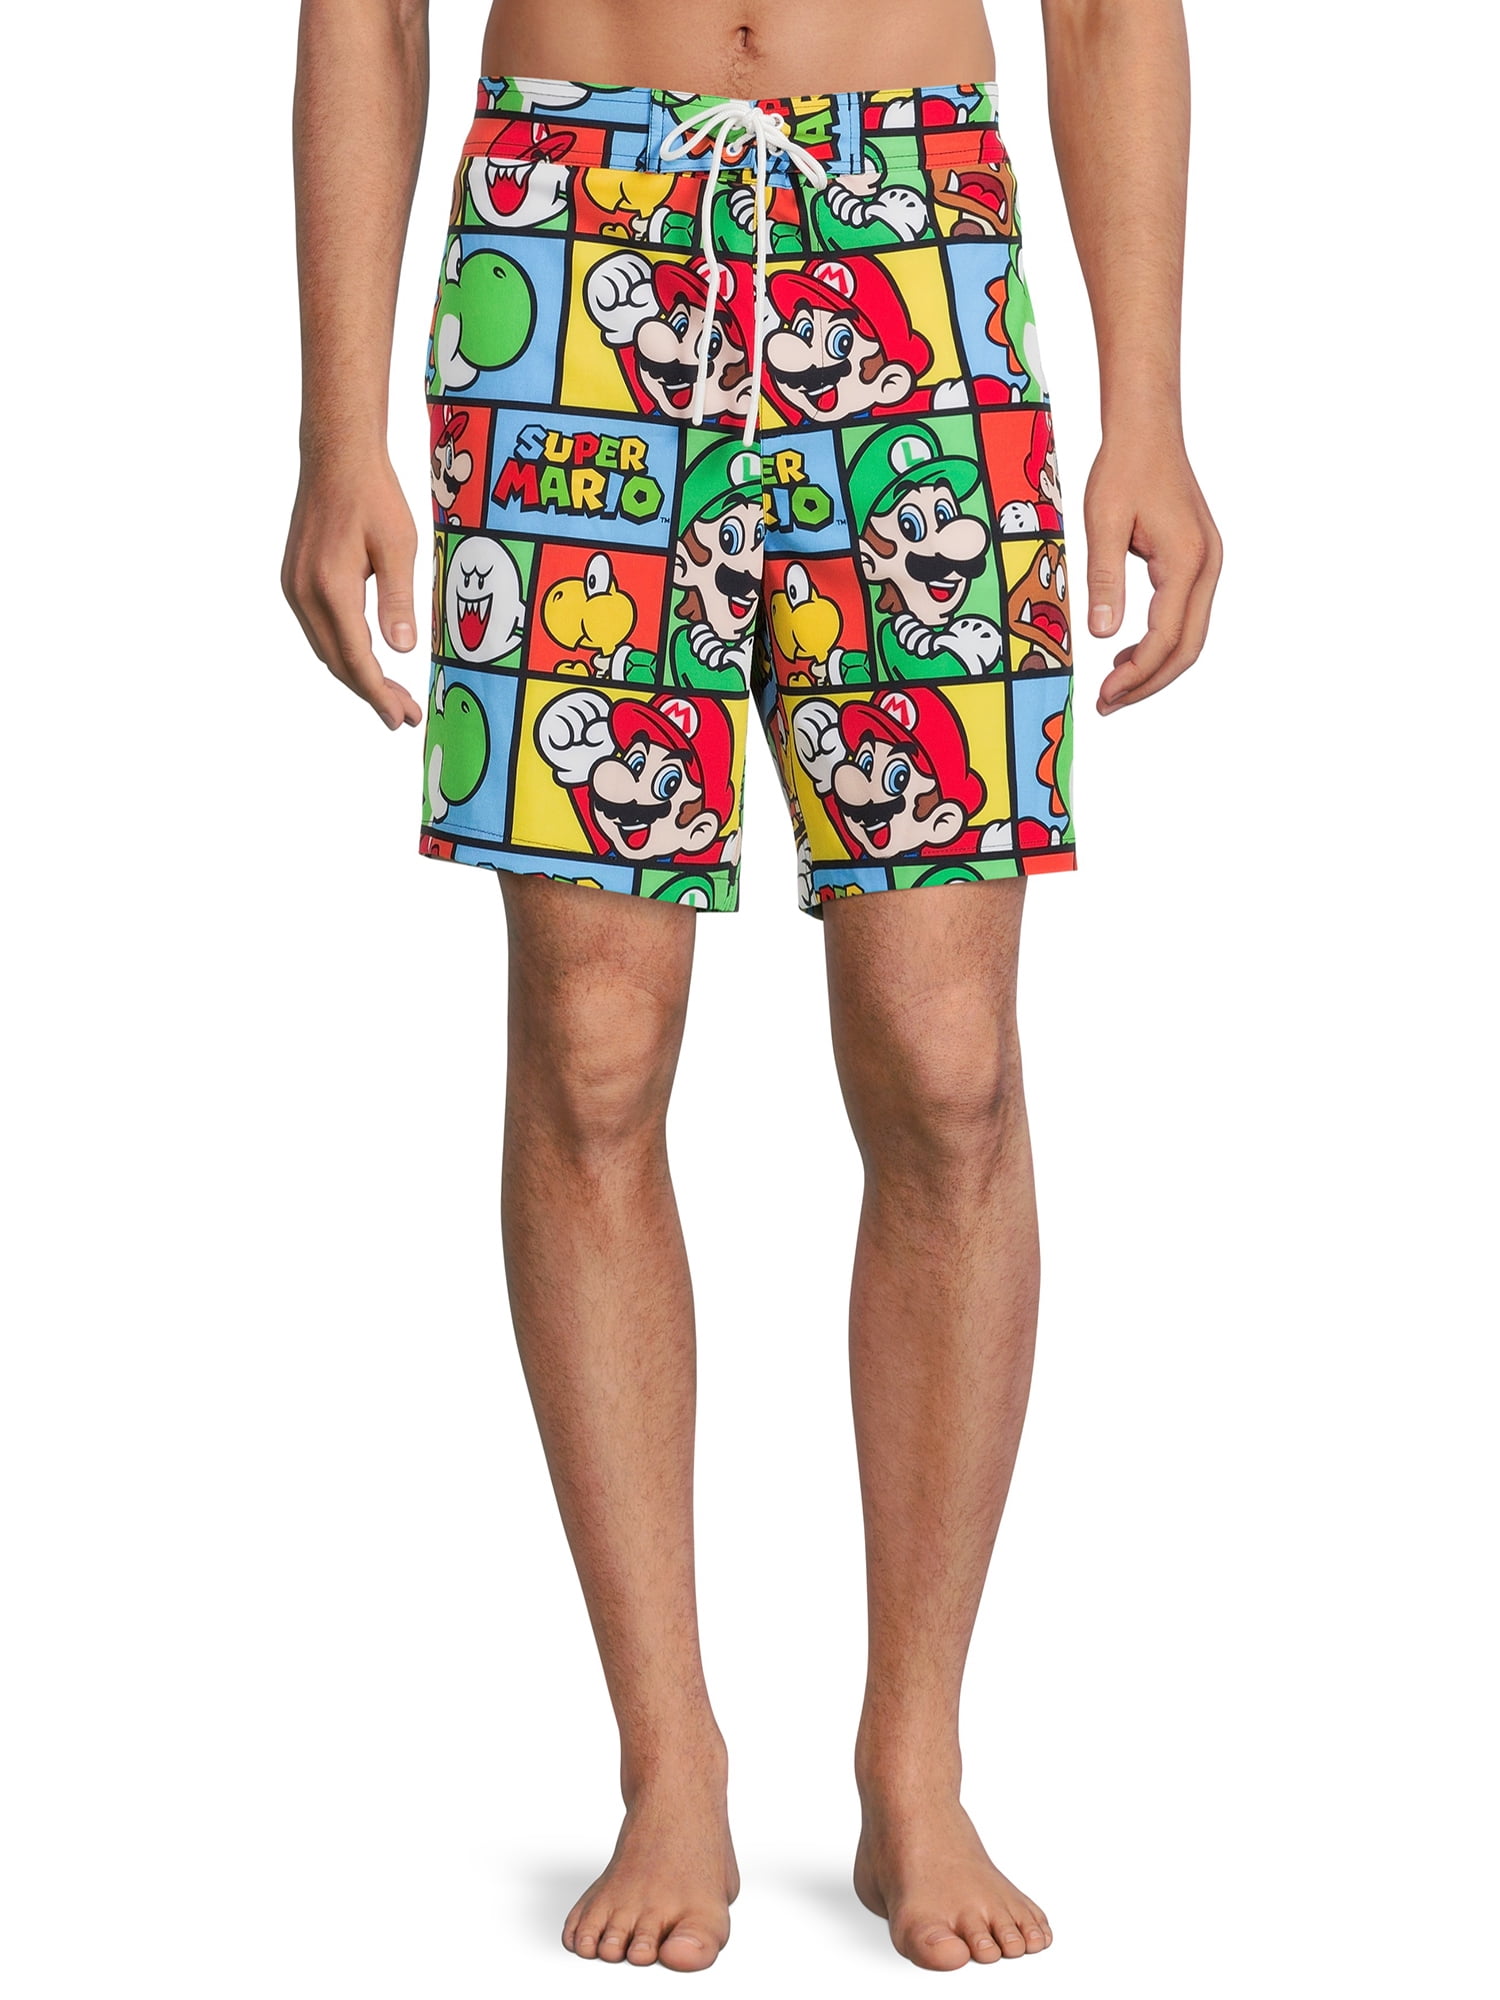 Super Mario Men's Boardshorts - Walmart.com